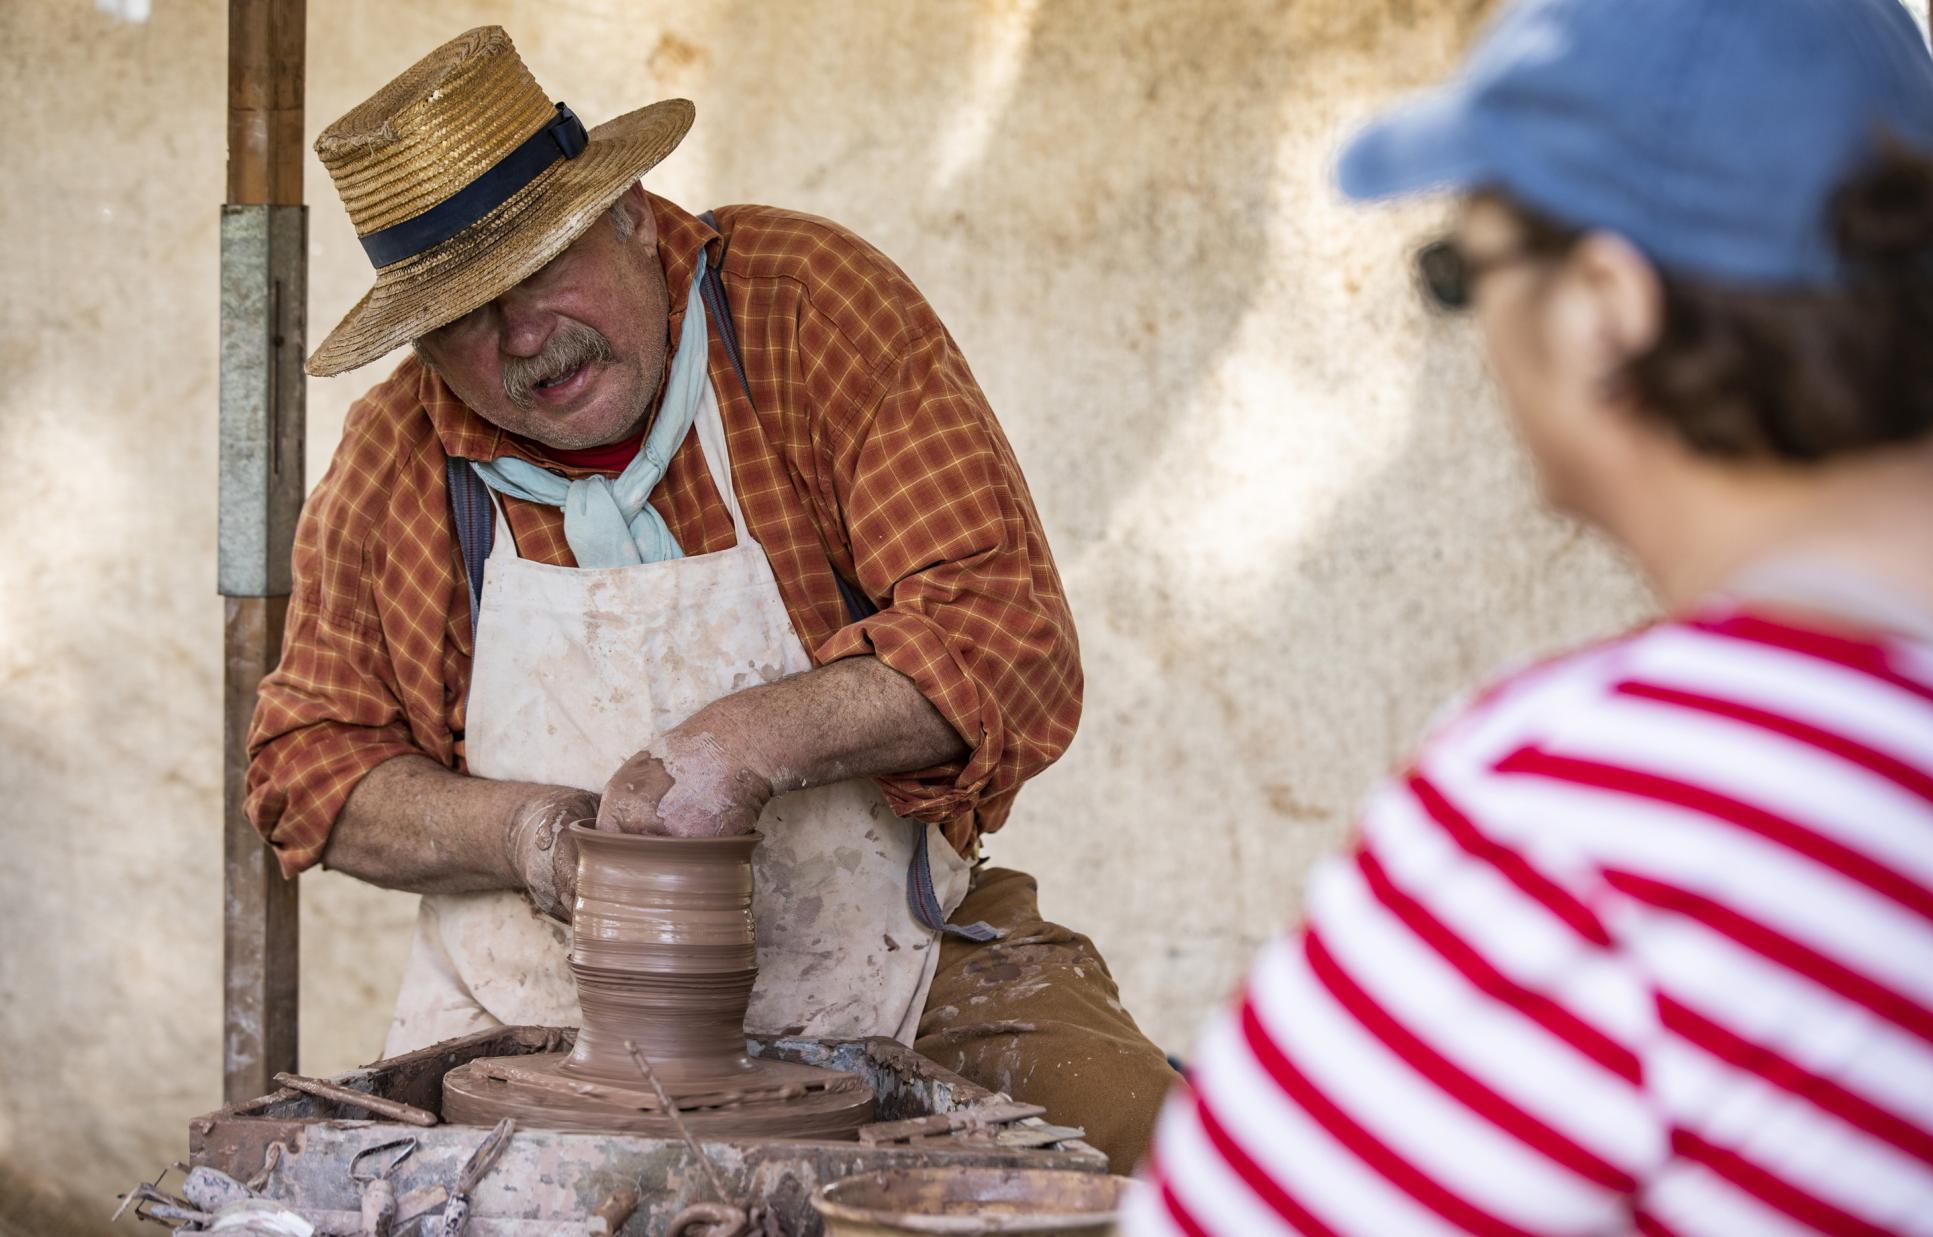 Reenactor demonstrating making pottery at Washington on the Brazos